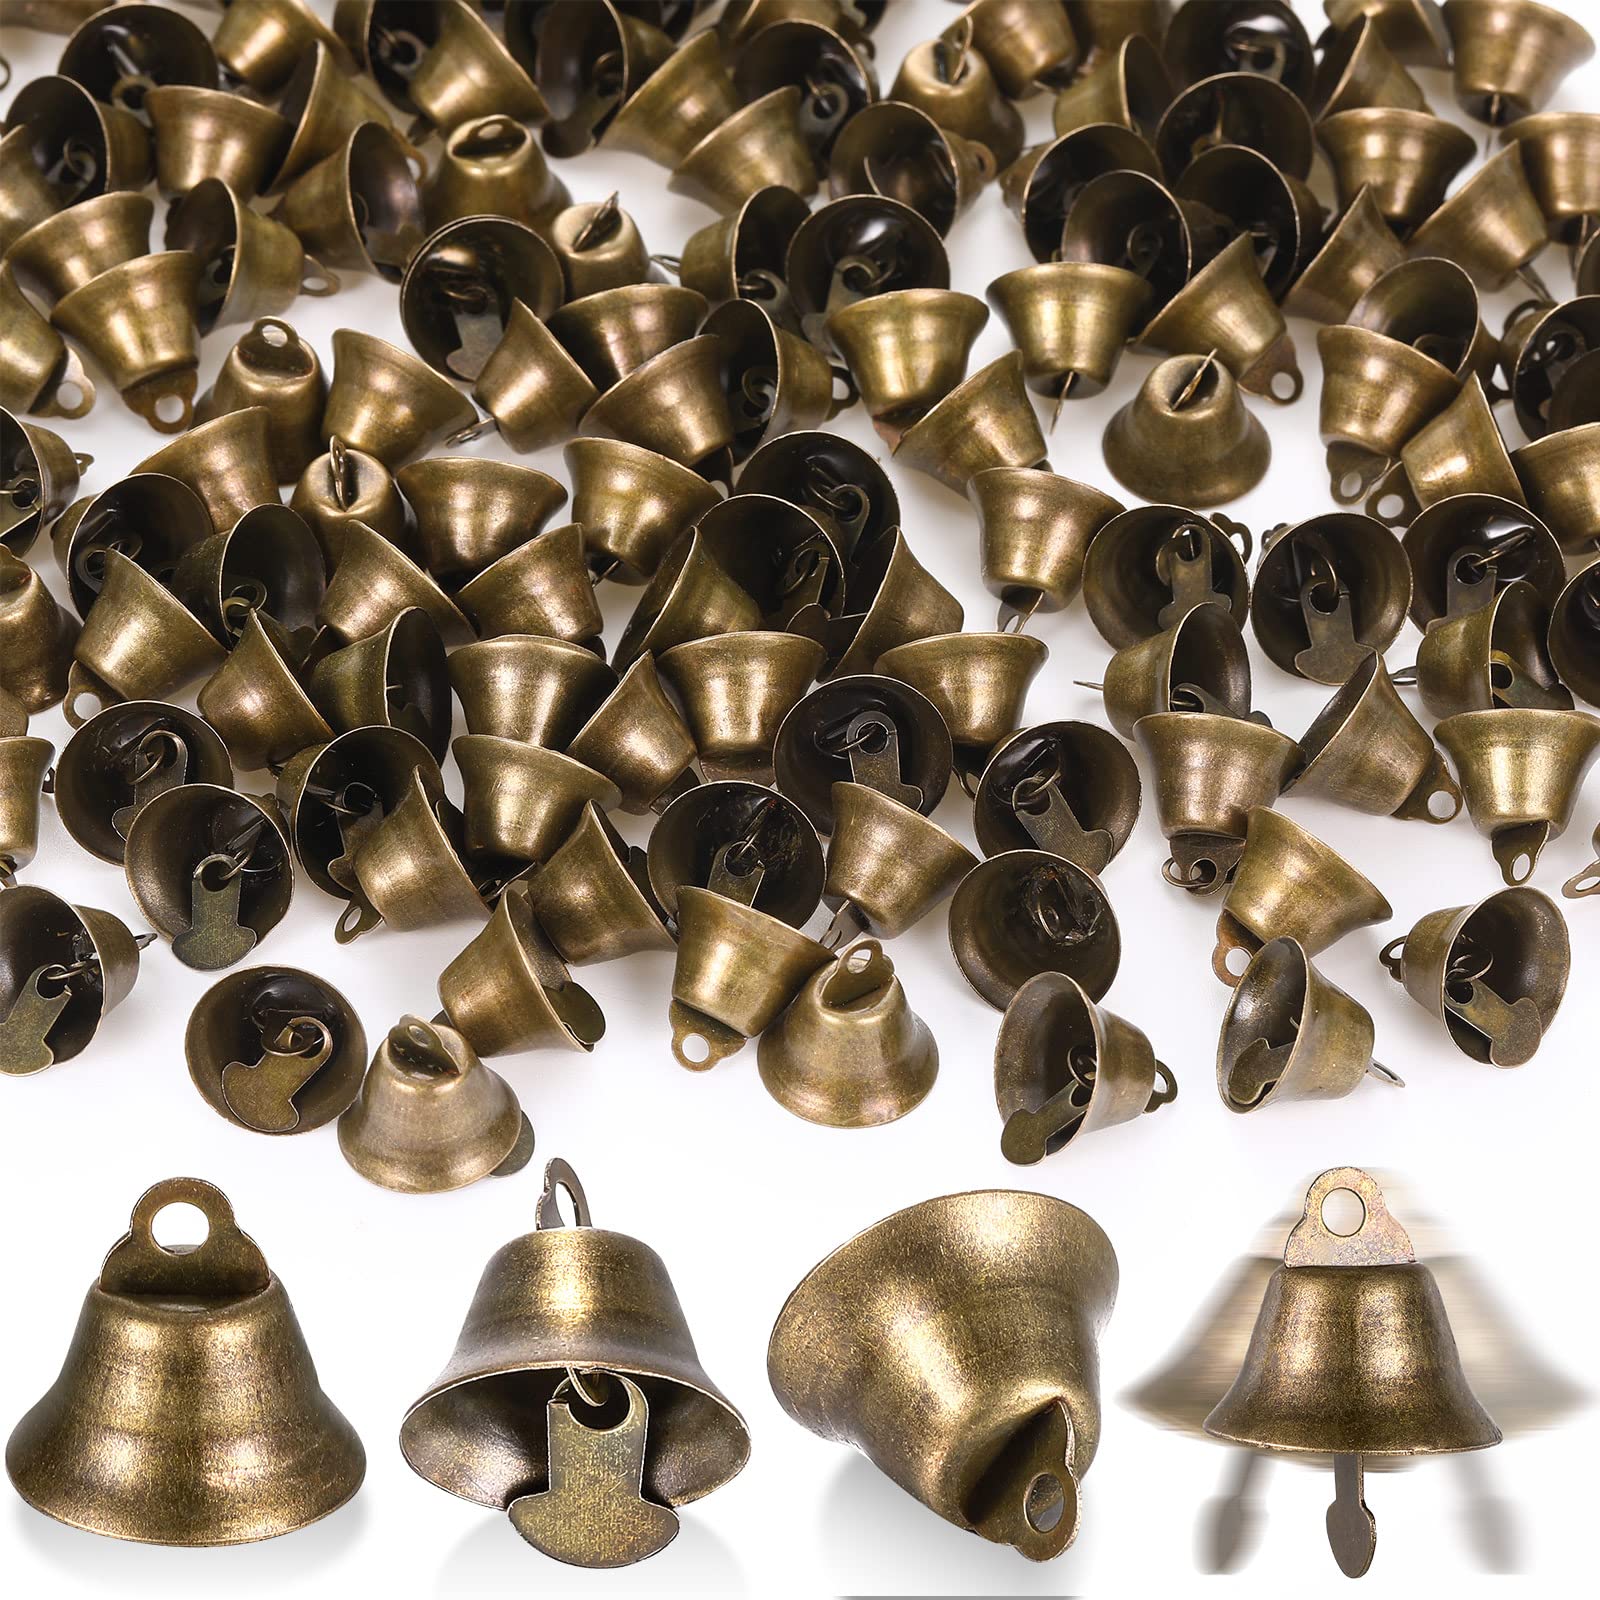 Zhengmy 200 Pcs Mini Bronze Decorative Bells Vintage Craft Bells